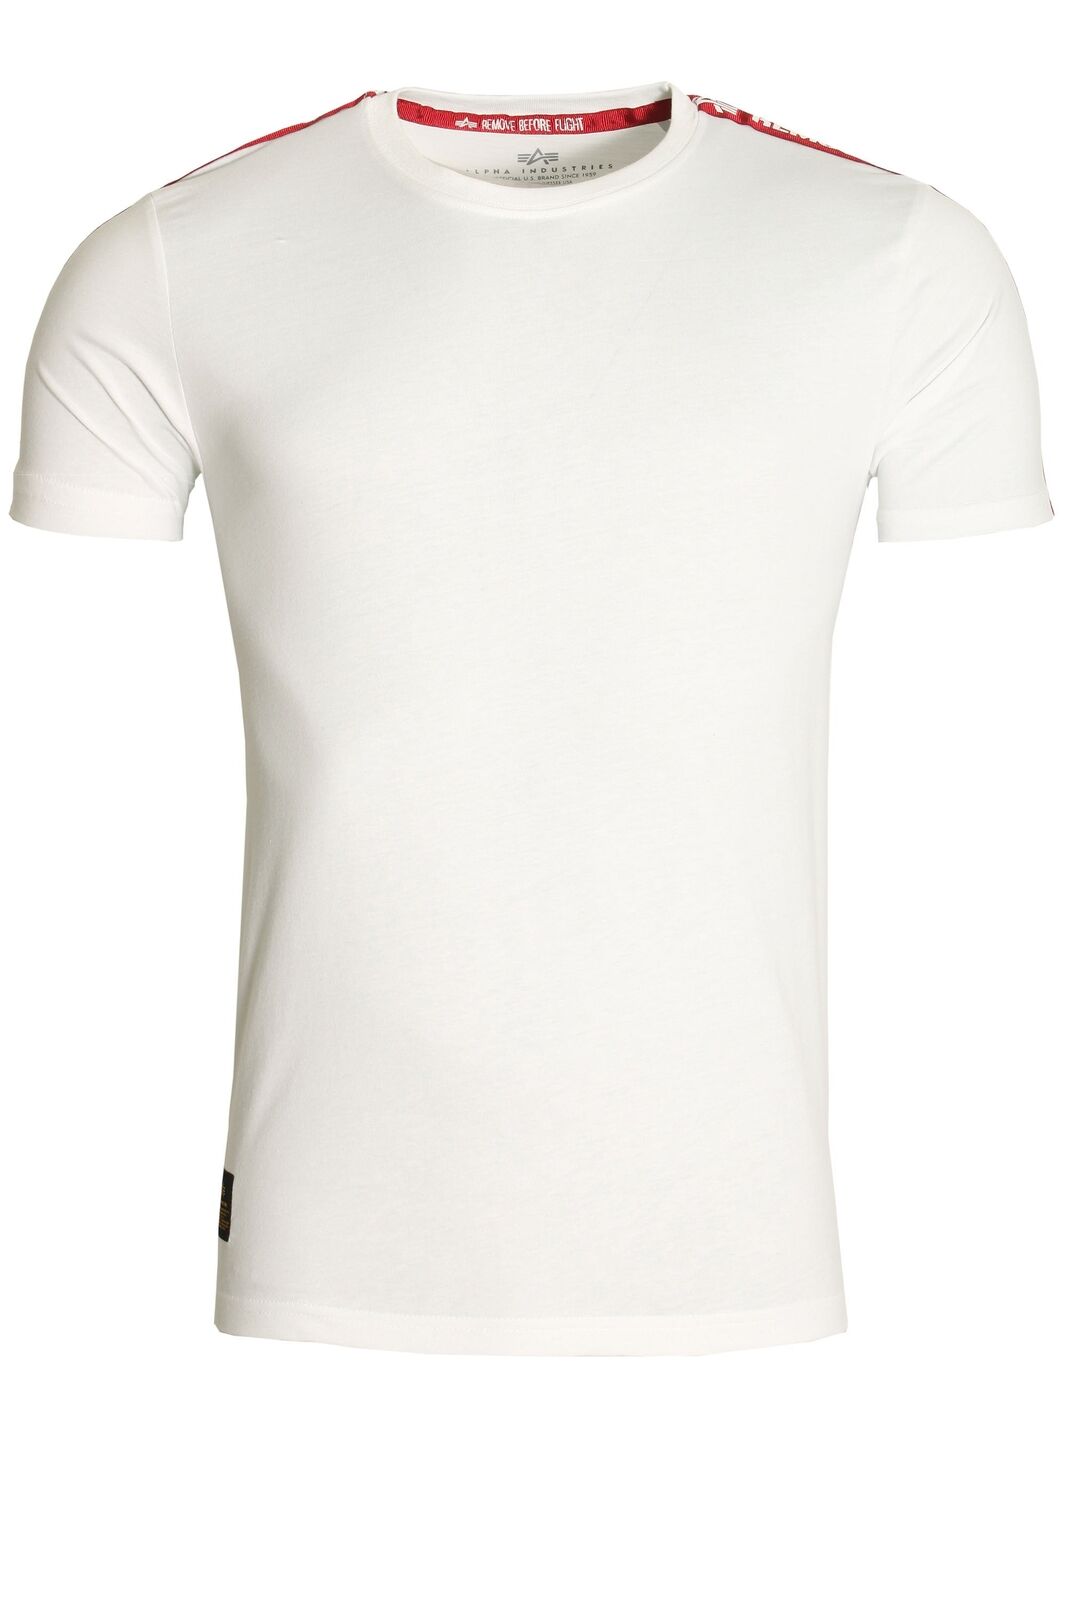 Mens T-Shirt ALPHA INDUSTRIES RBF Taped t-shirt White | eBay | T-Shirts